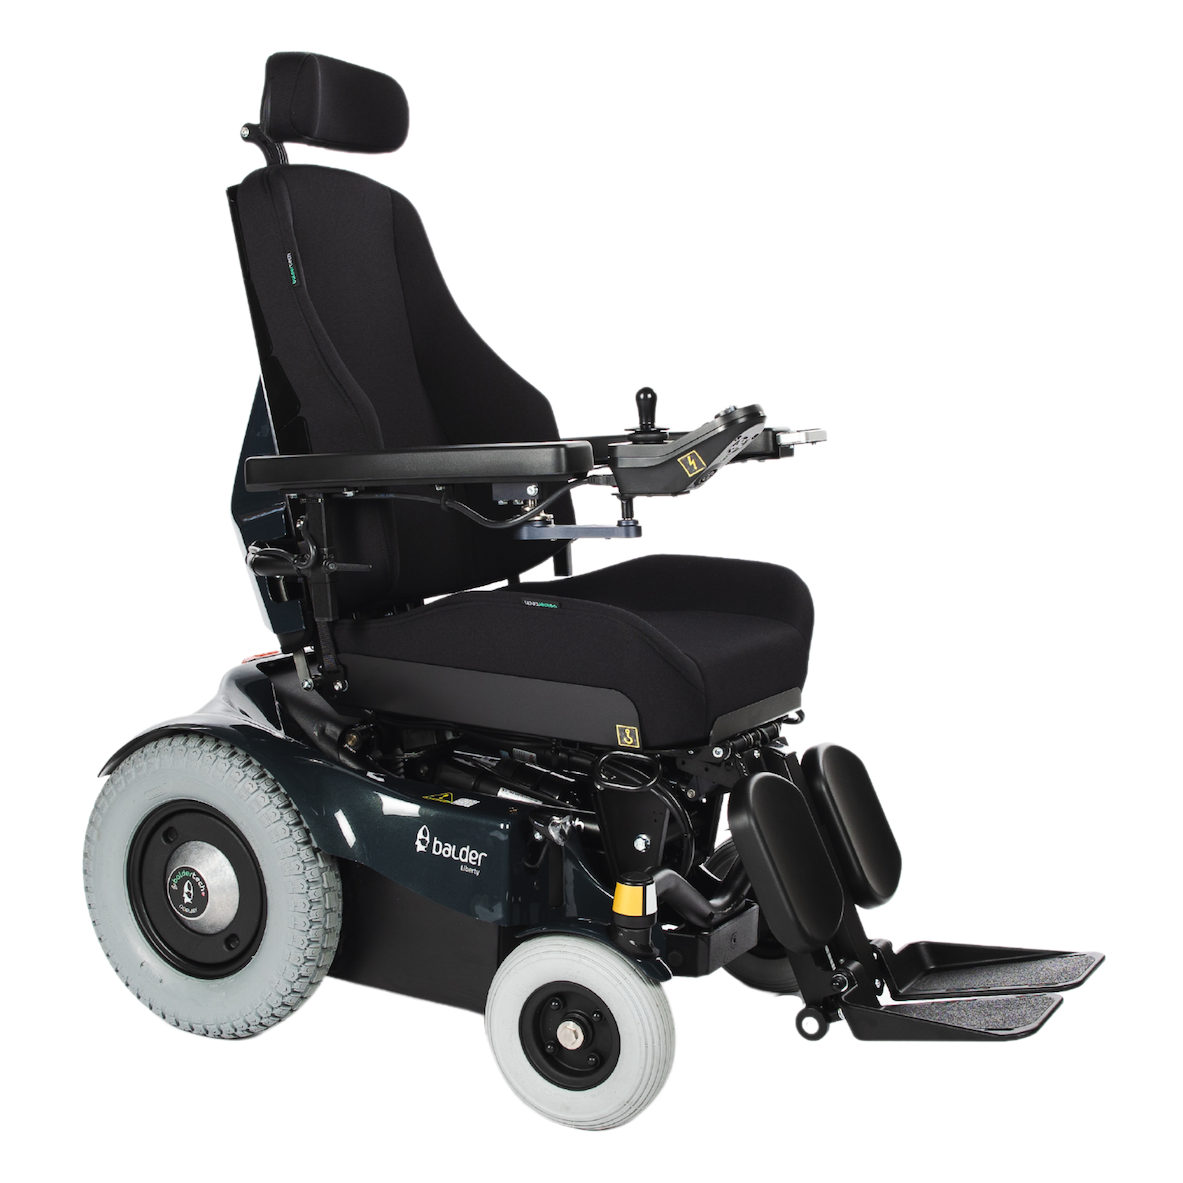 A side view of the Balder Liberty L380 powerchair. A rear wheel drive electric wheelchair.